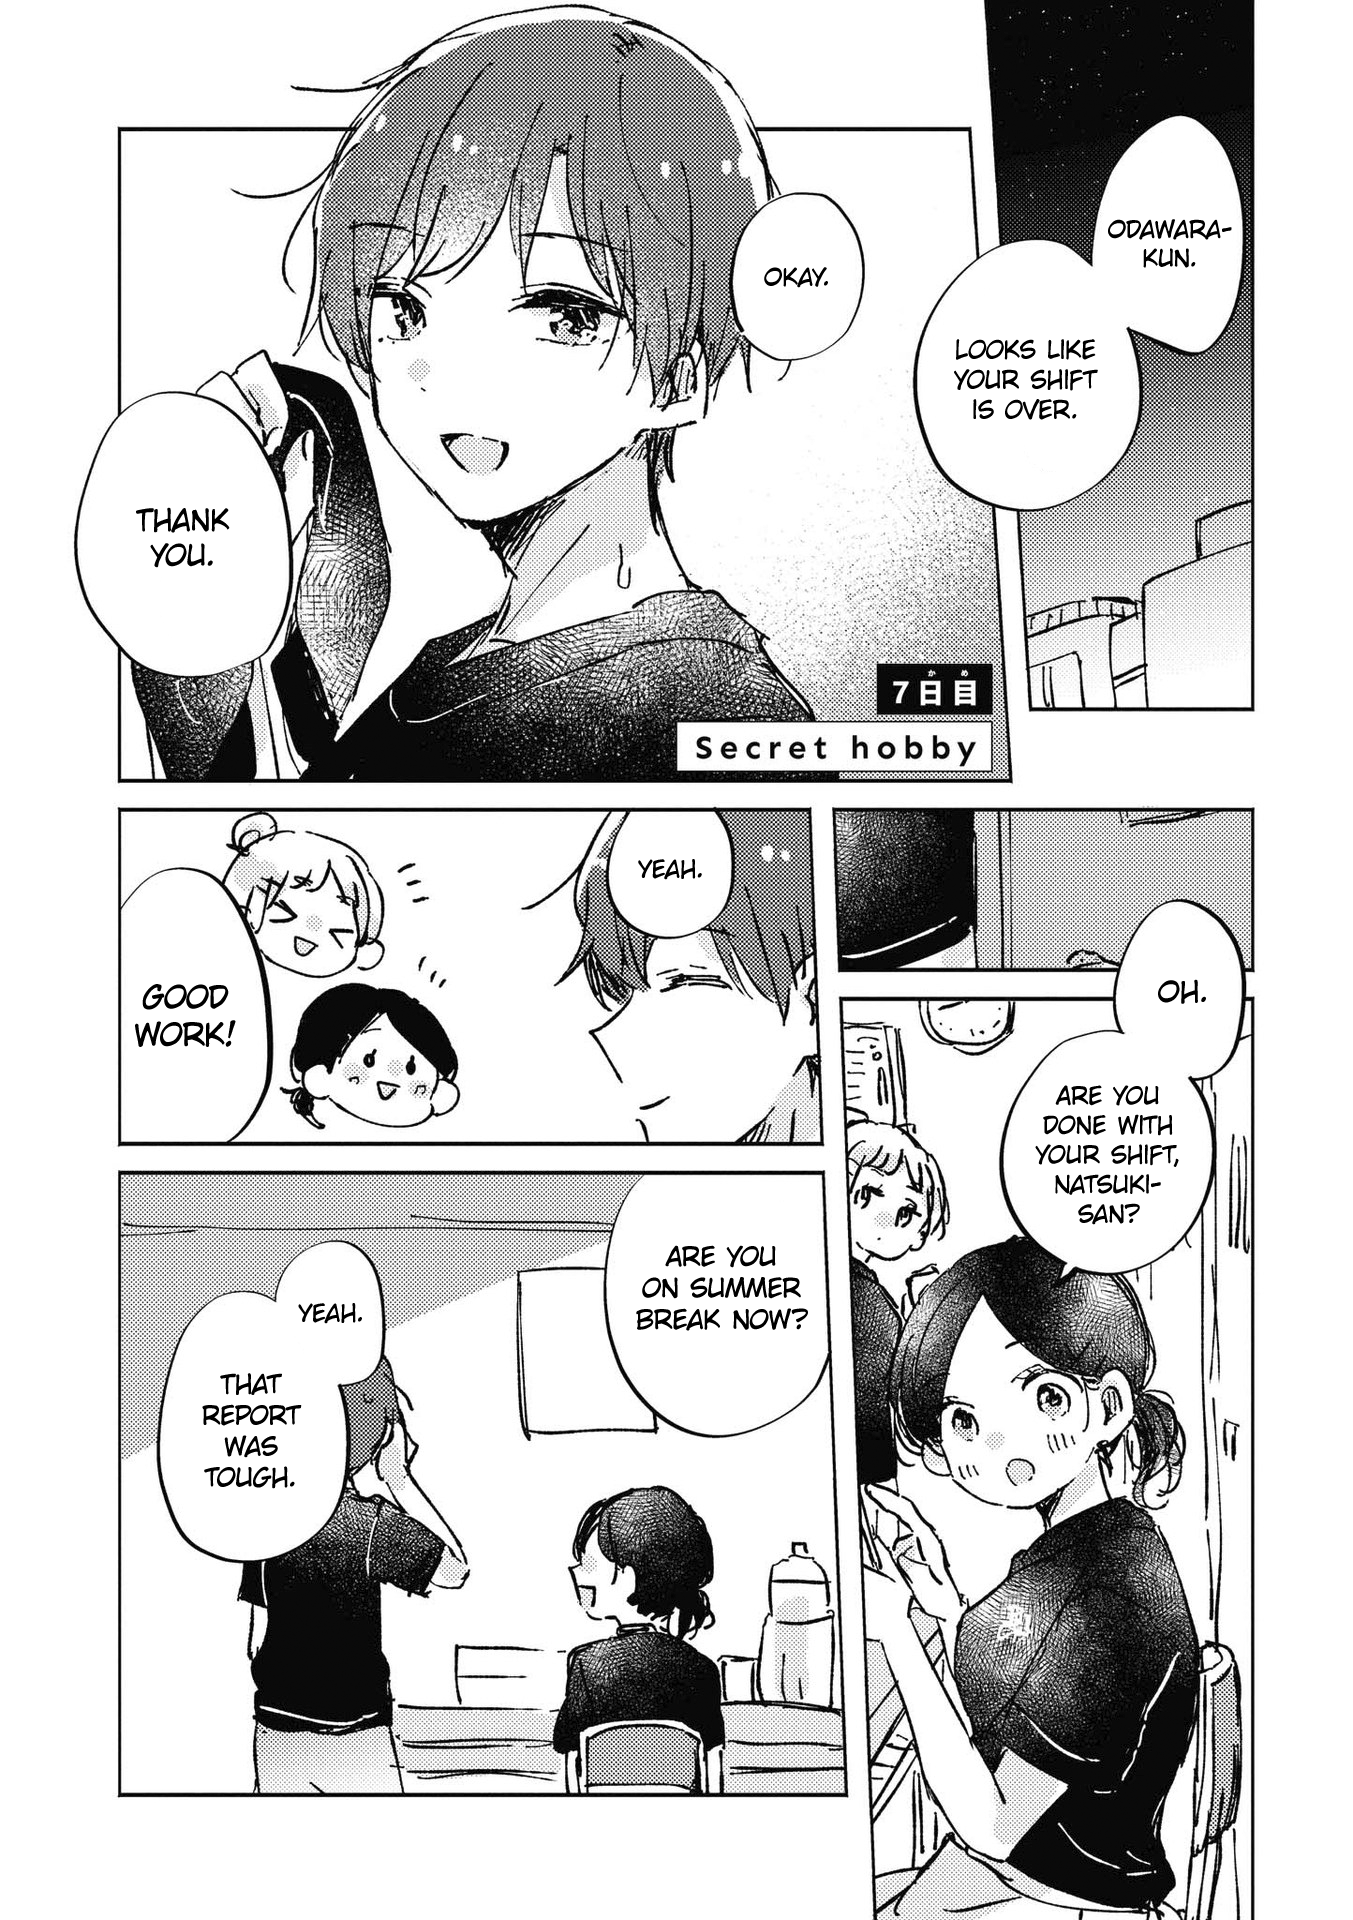 Natsuki-Kun Is Beautiful As Always - Page 2